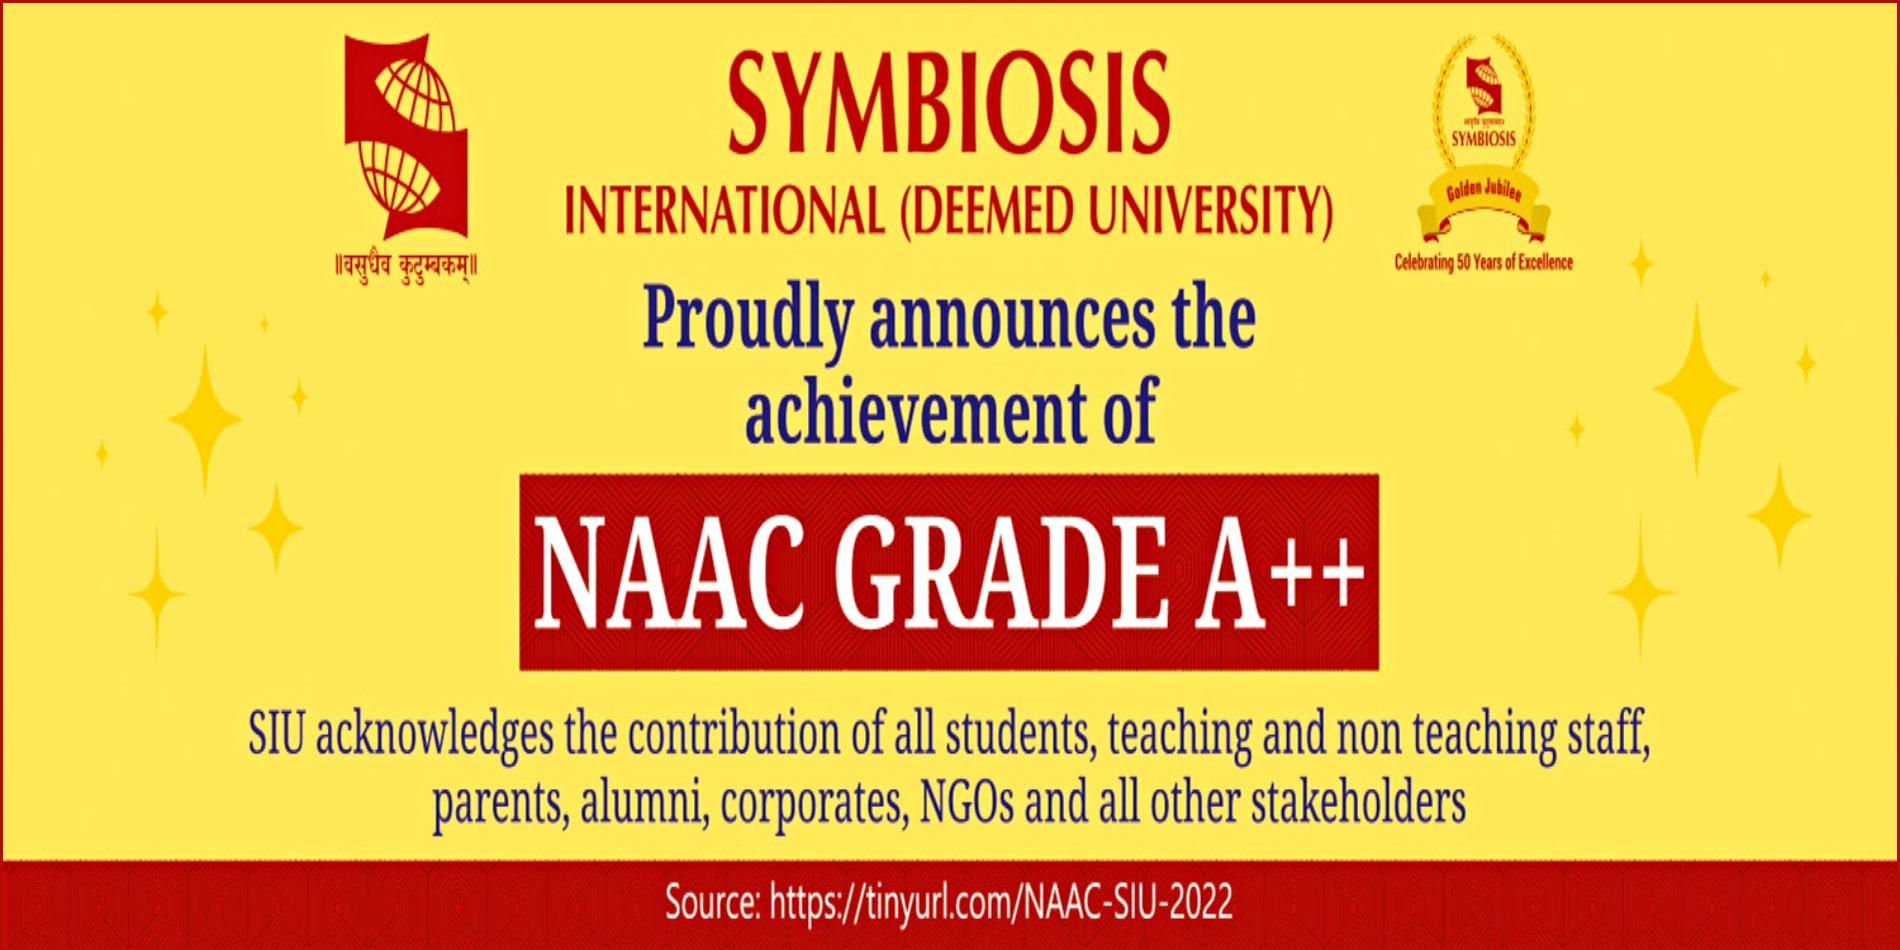 Symbiosis NACC Grade A++